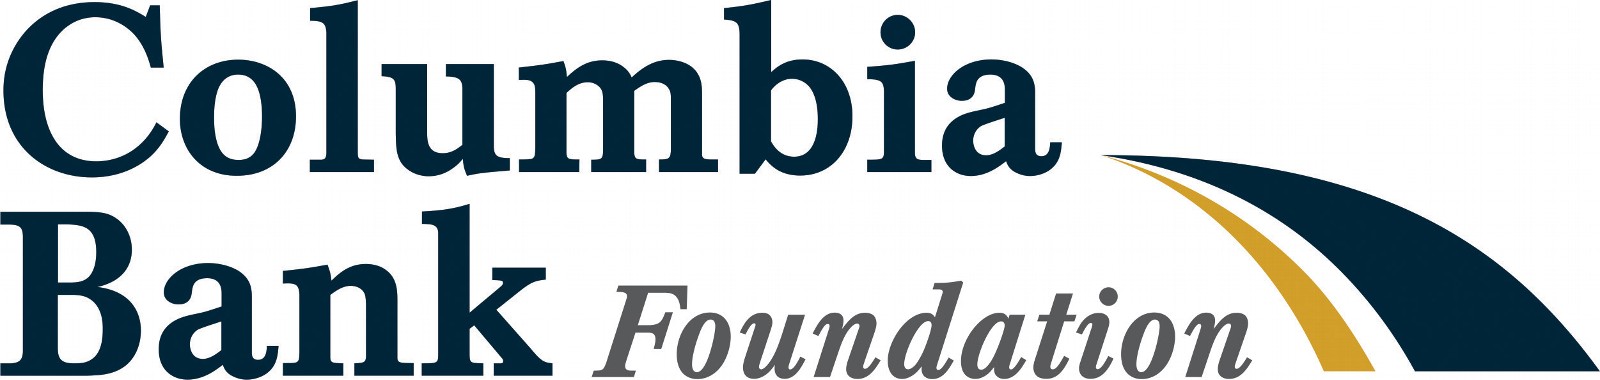 Columbia Bank Foundation